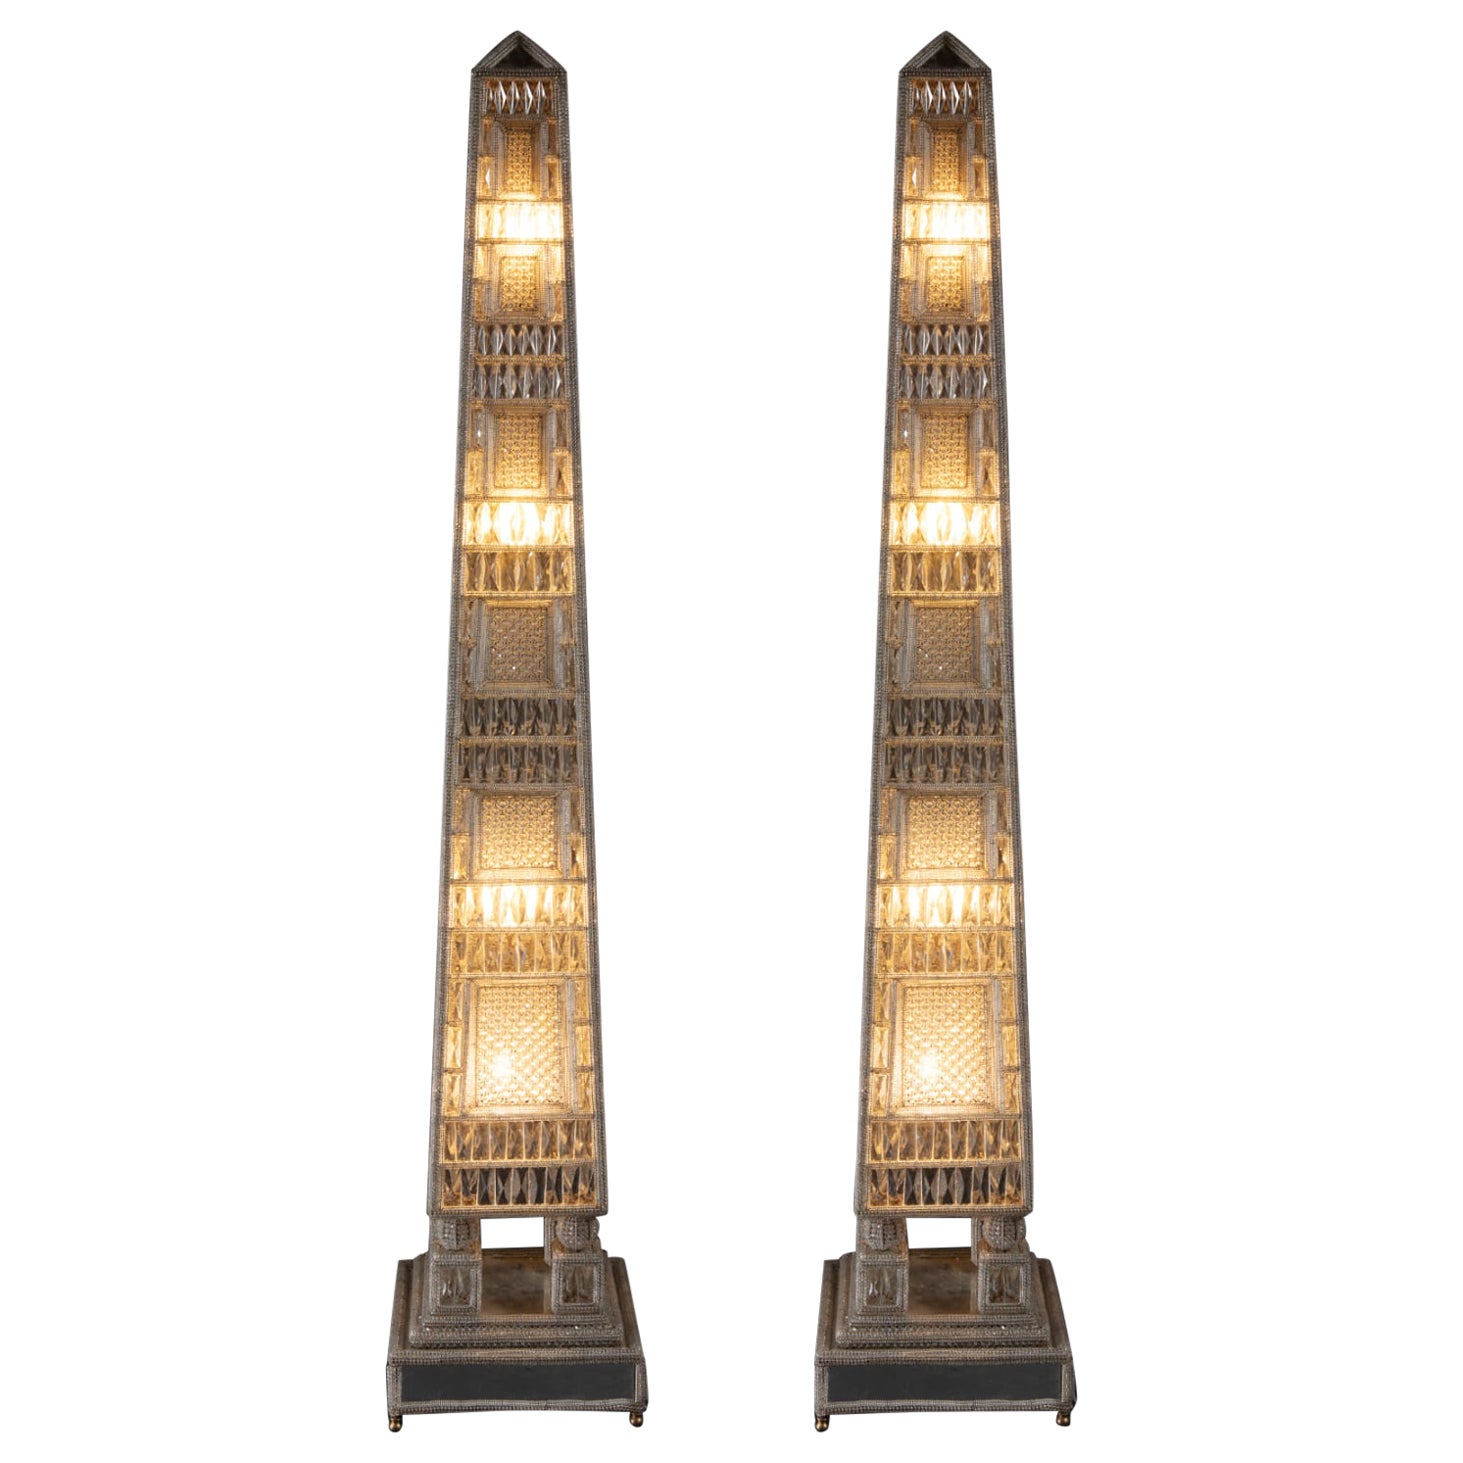 Pair of Monumental and Elegant Obelisk-Shaped Floor Lamps